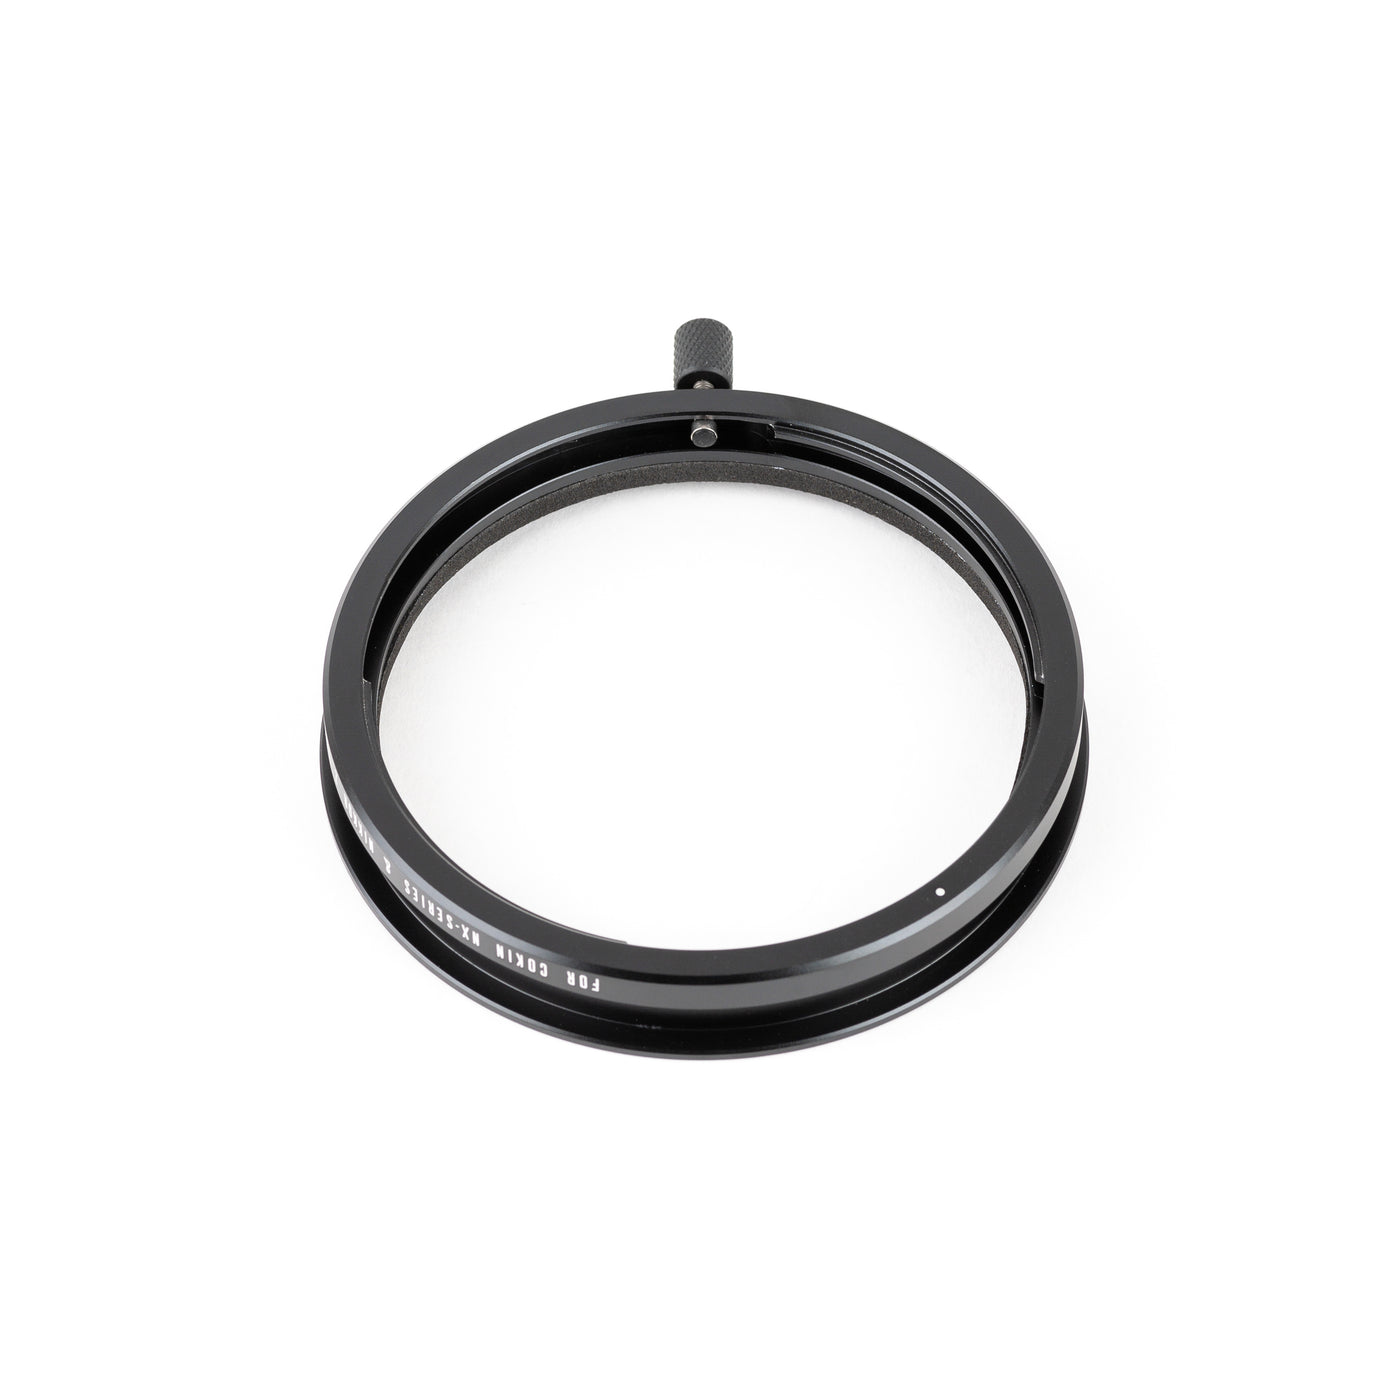 Adaptor Rings - Adapter Rings for Filters - LEE Filters